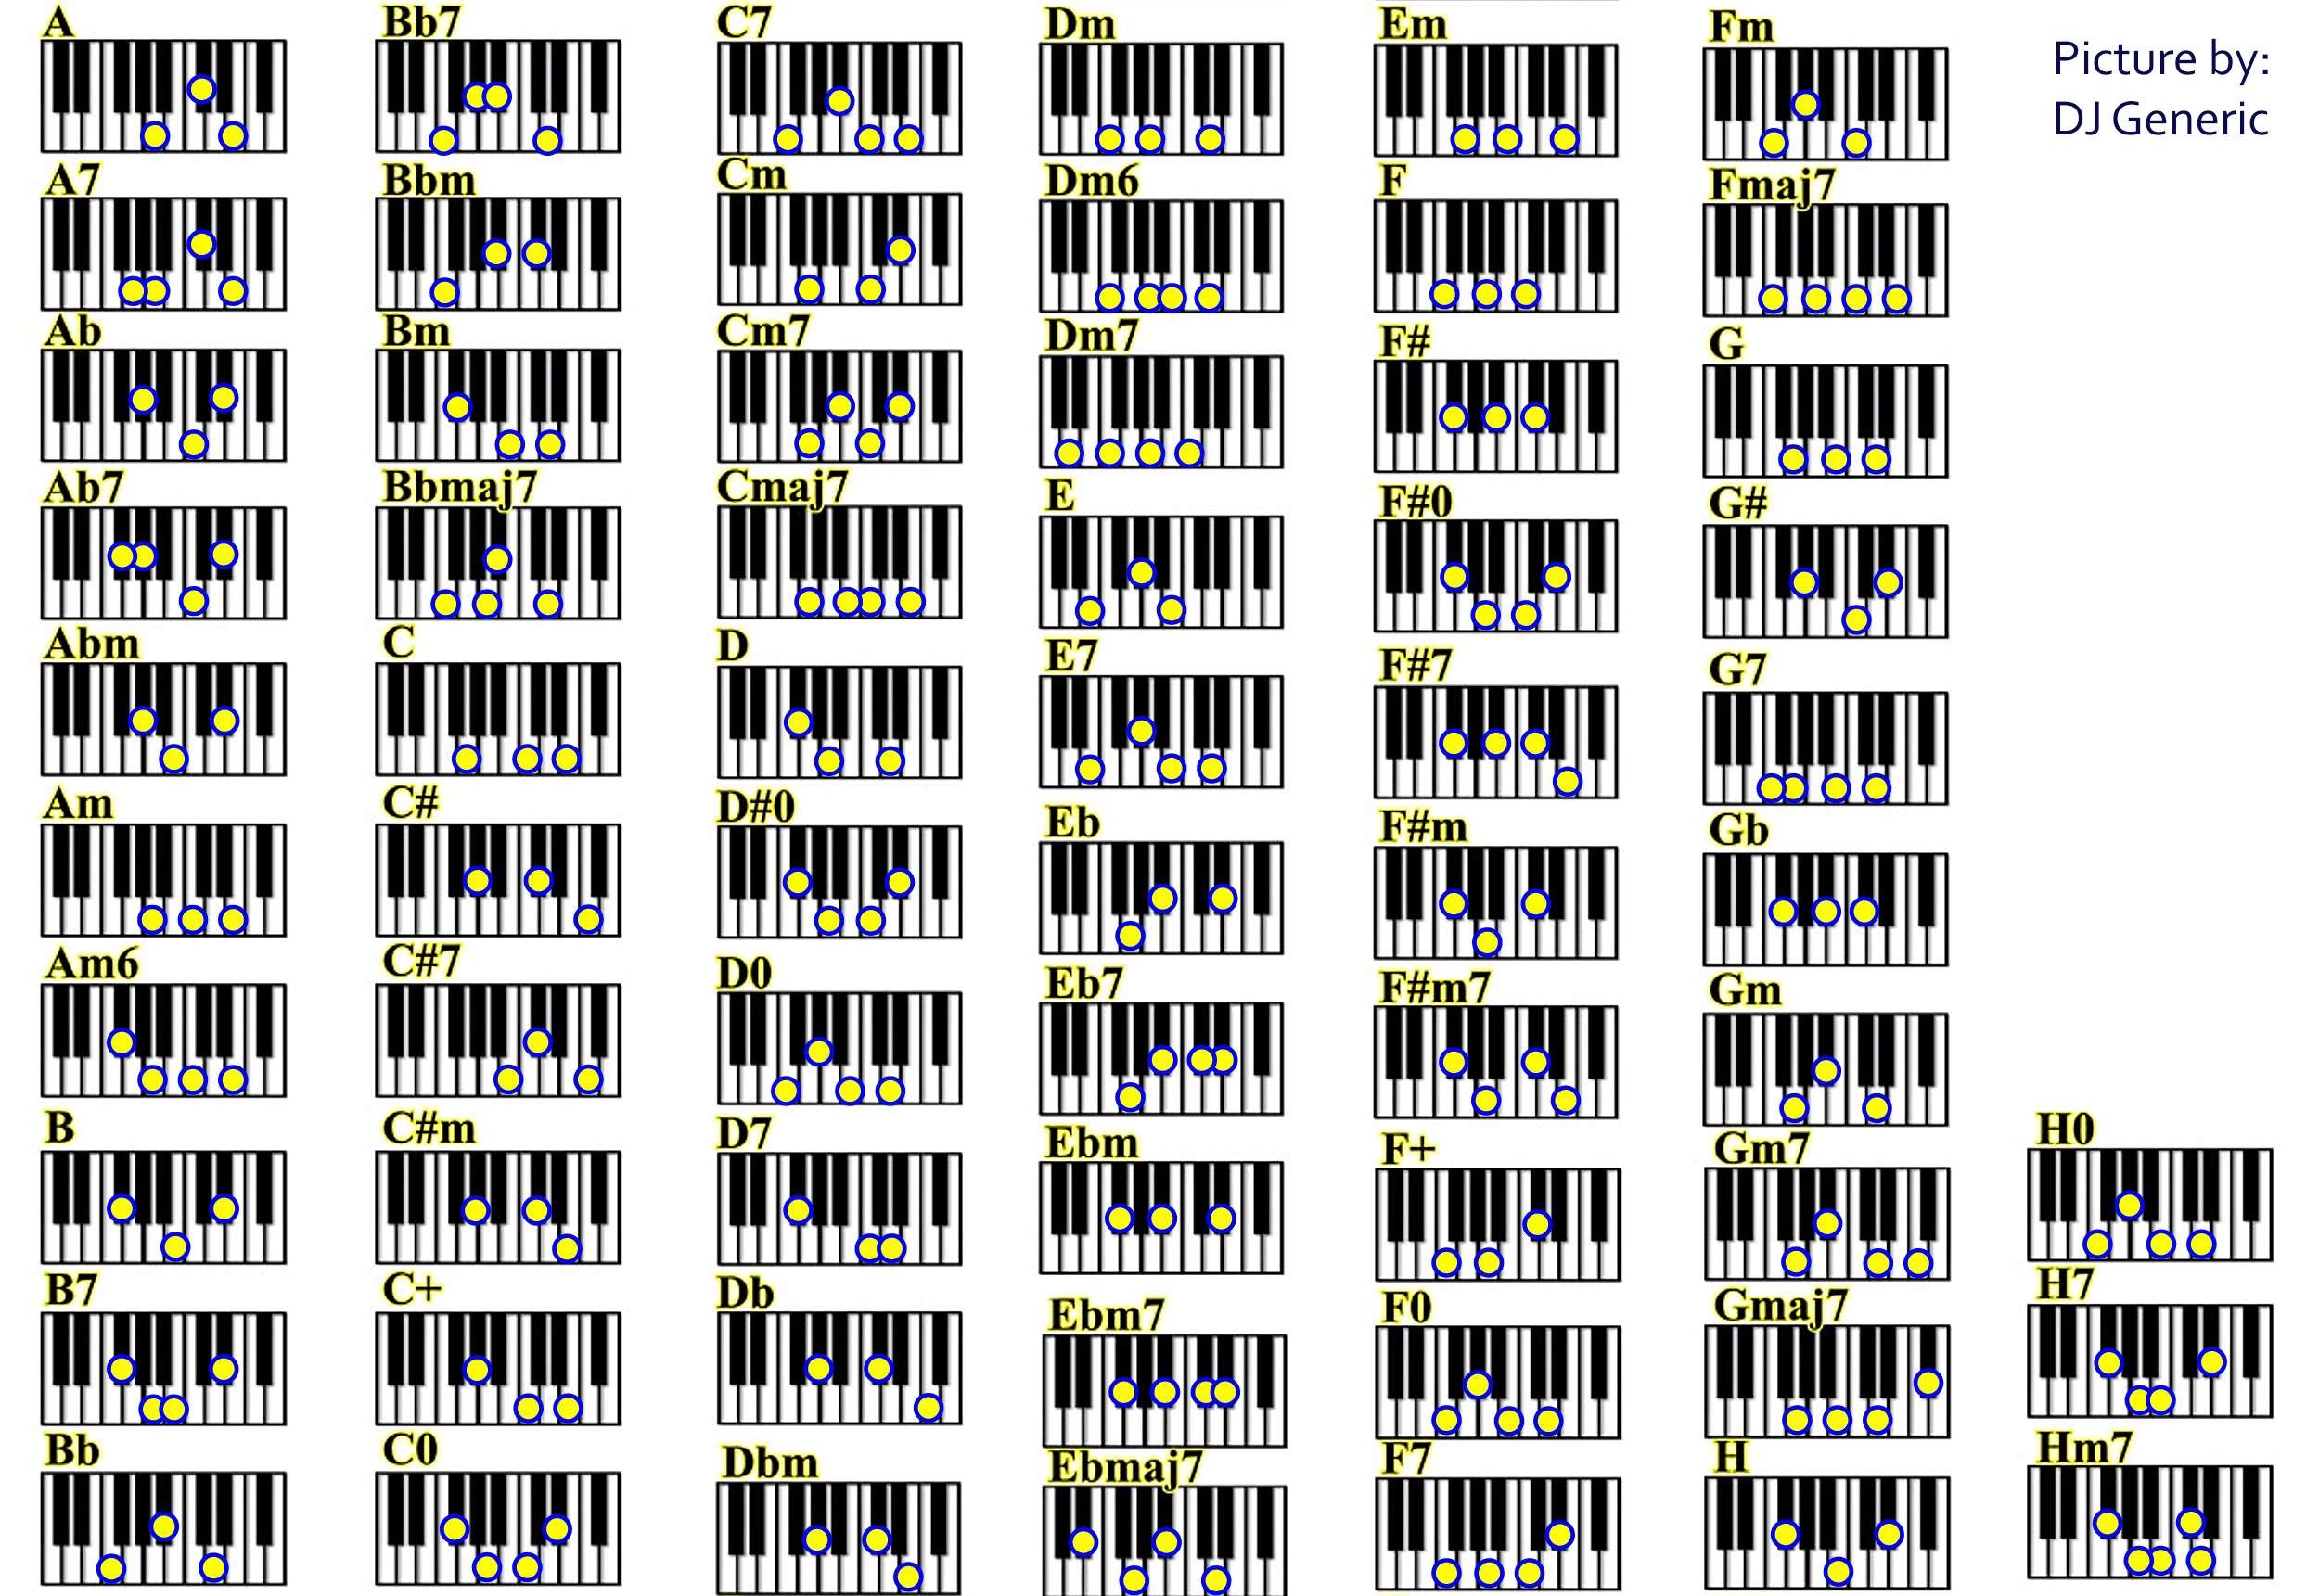 Piano Chords Chart